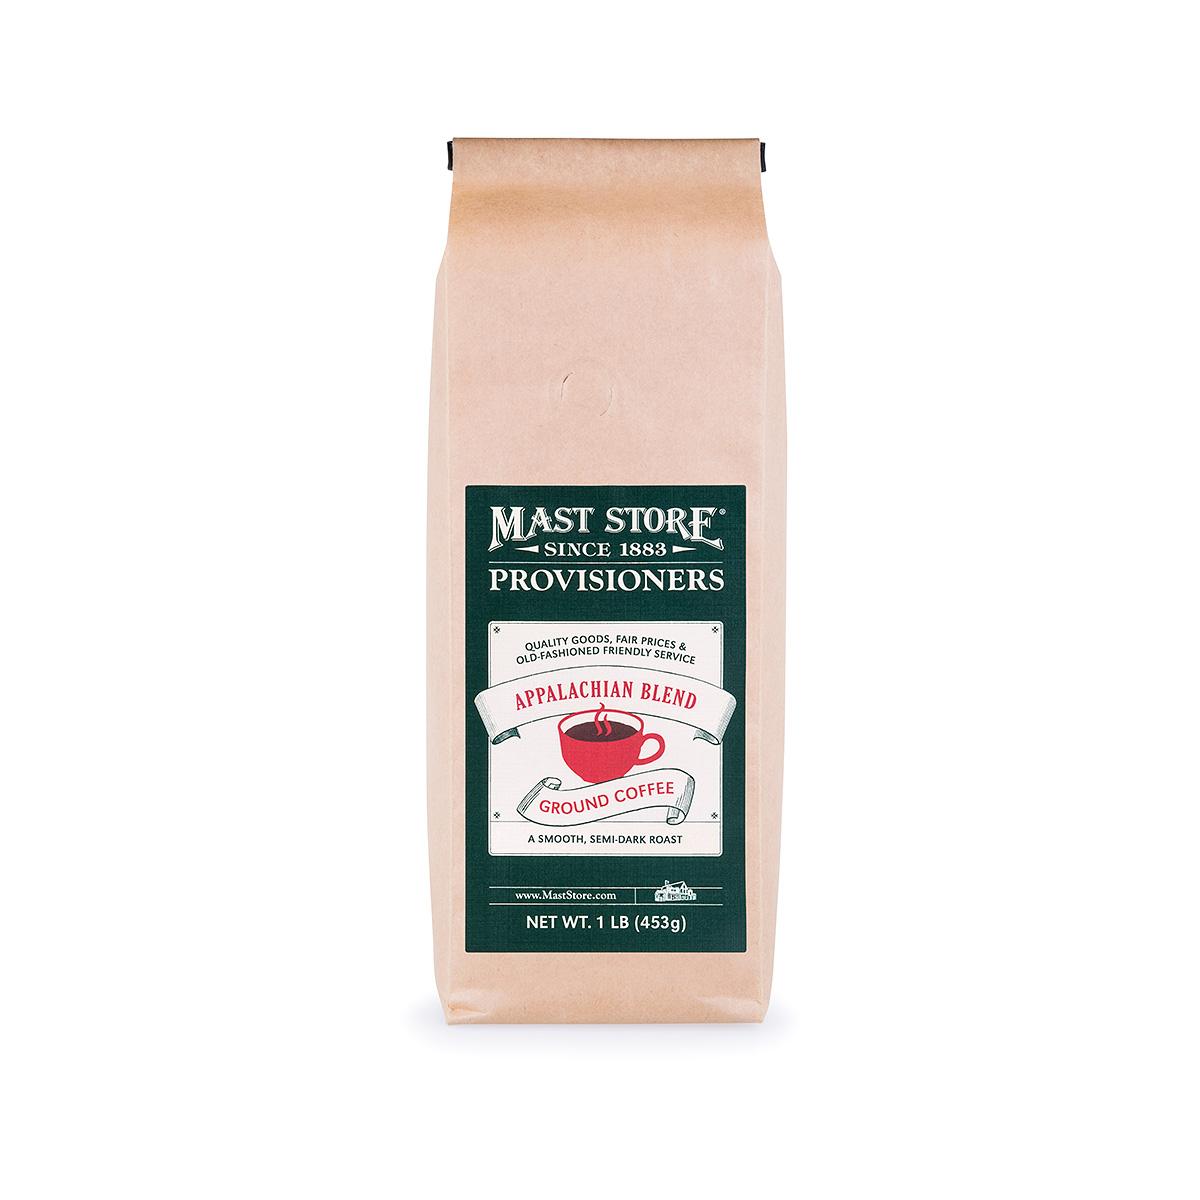  Mast Store Provisioners Appalachian Blend Ground Coffee